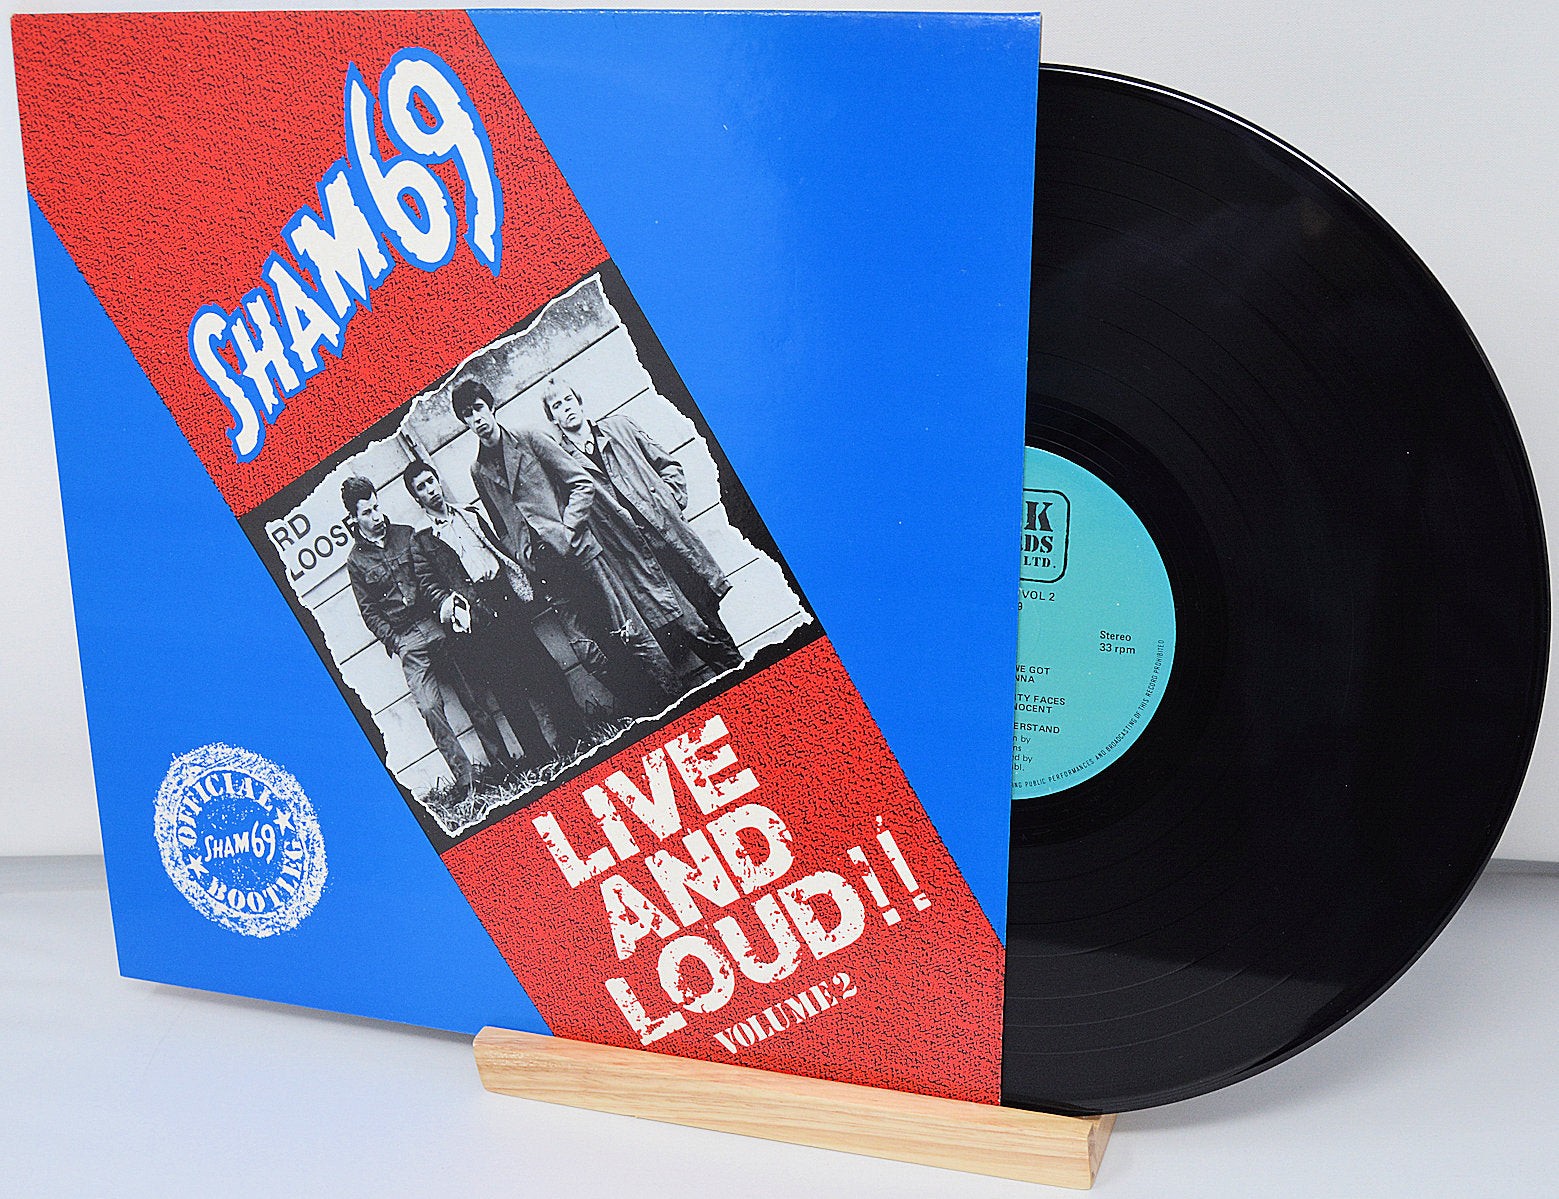 Sham 69 – Live And Loud!! Volume 2